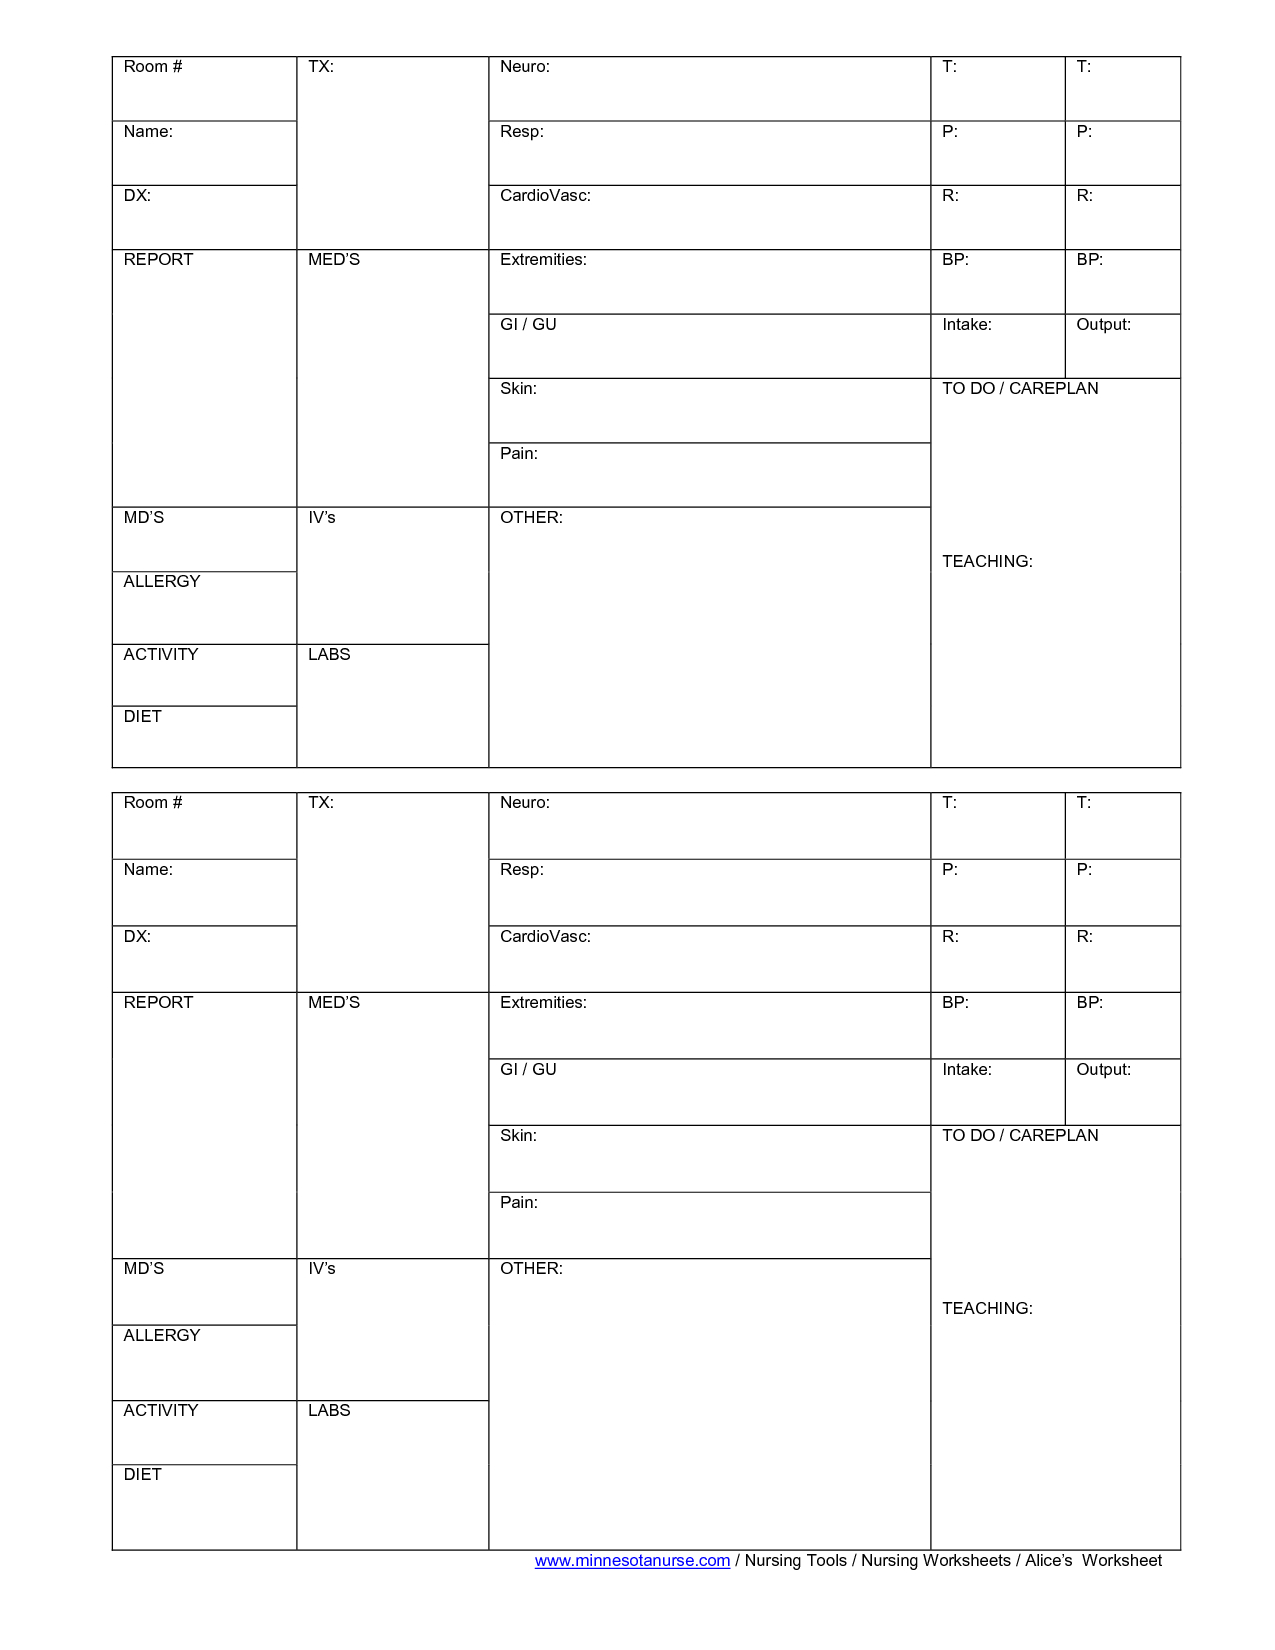 Blank Nursing Report Sheets For Newborns | Nursing Patient With Nursing Report Sheet Template